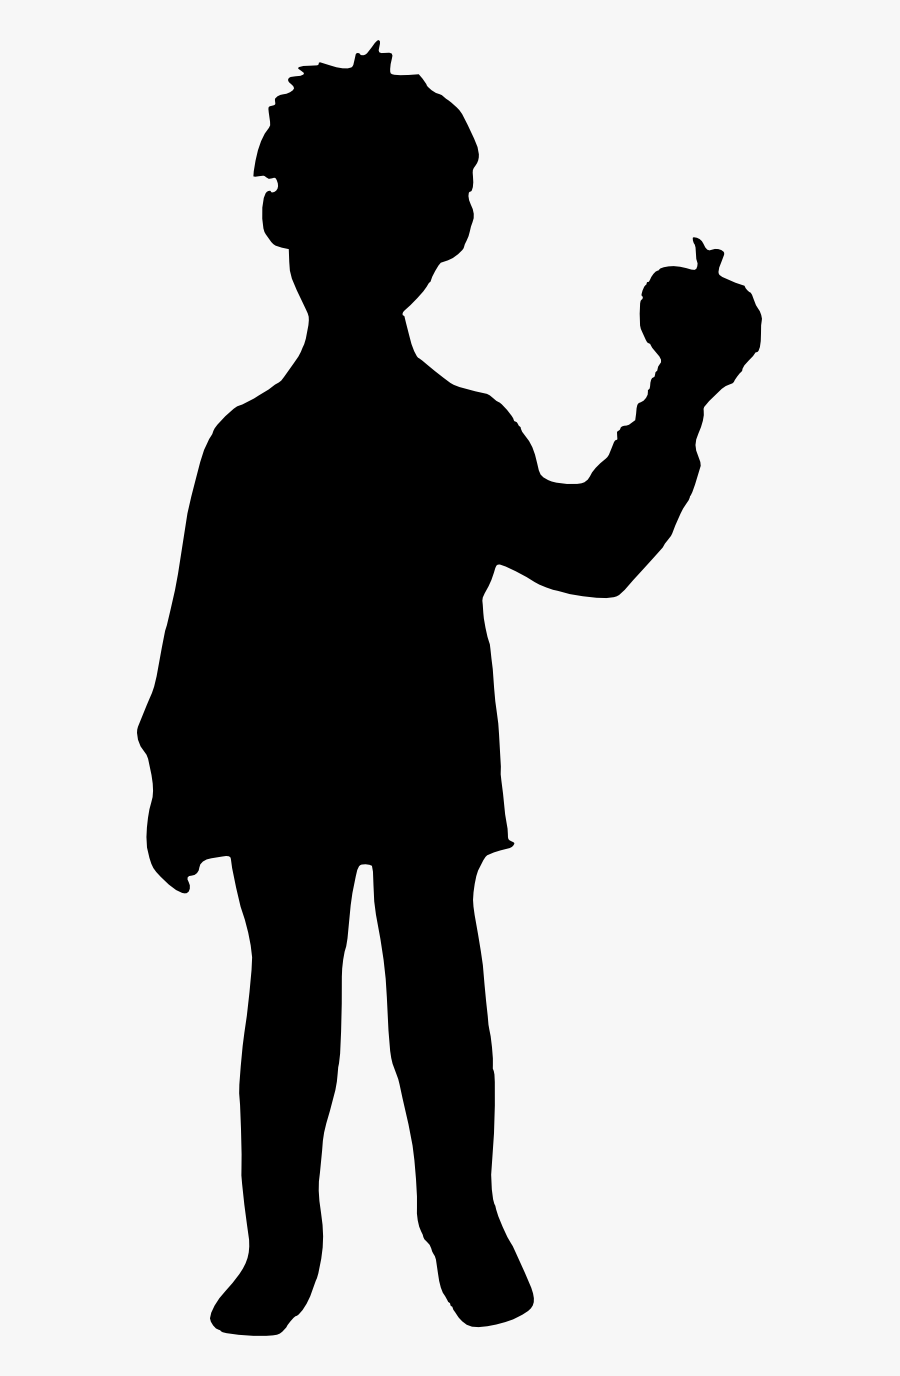 Boy Silhouette Png, Transparent Clipart